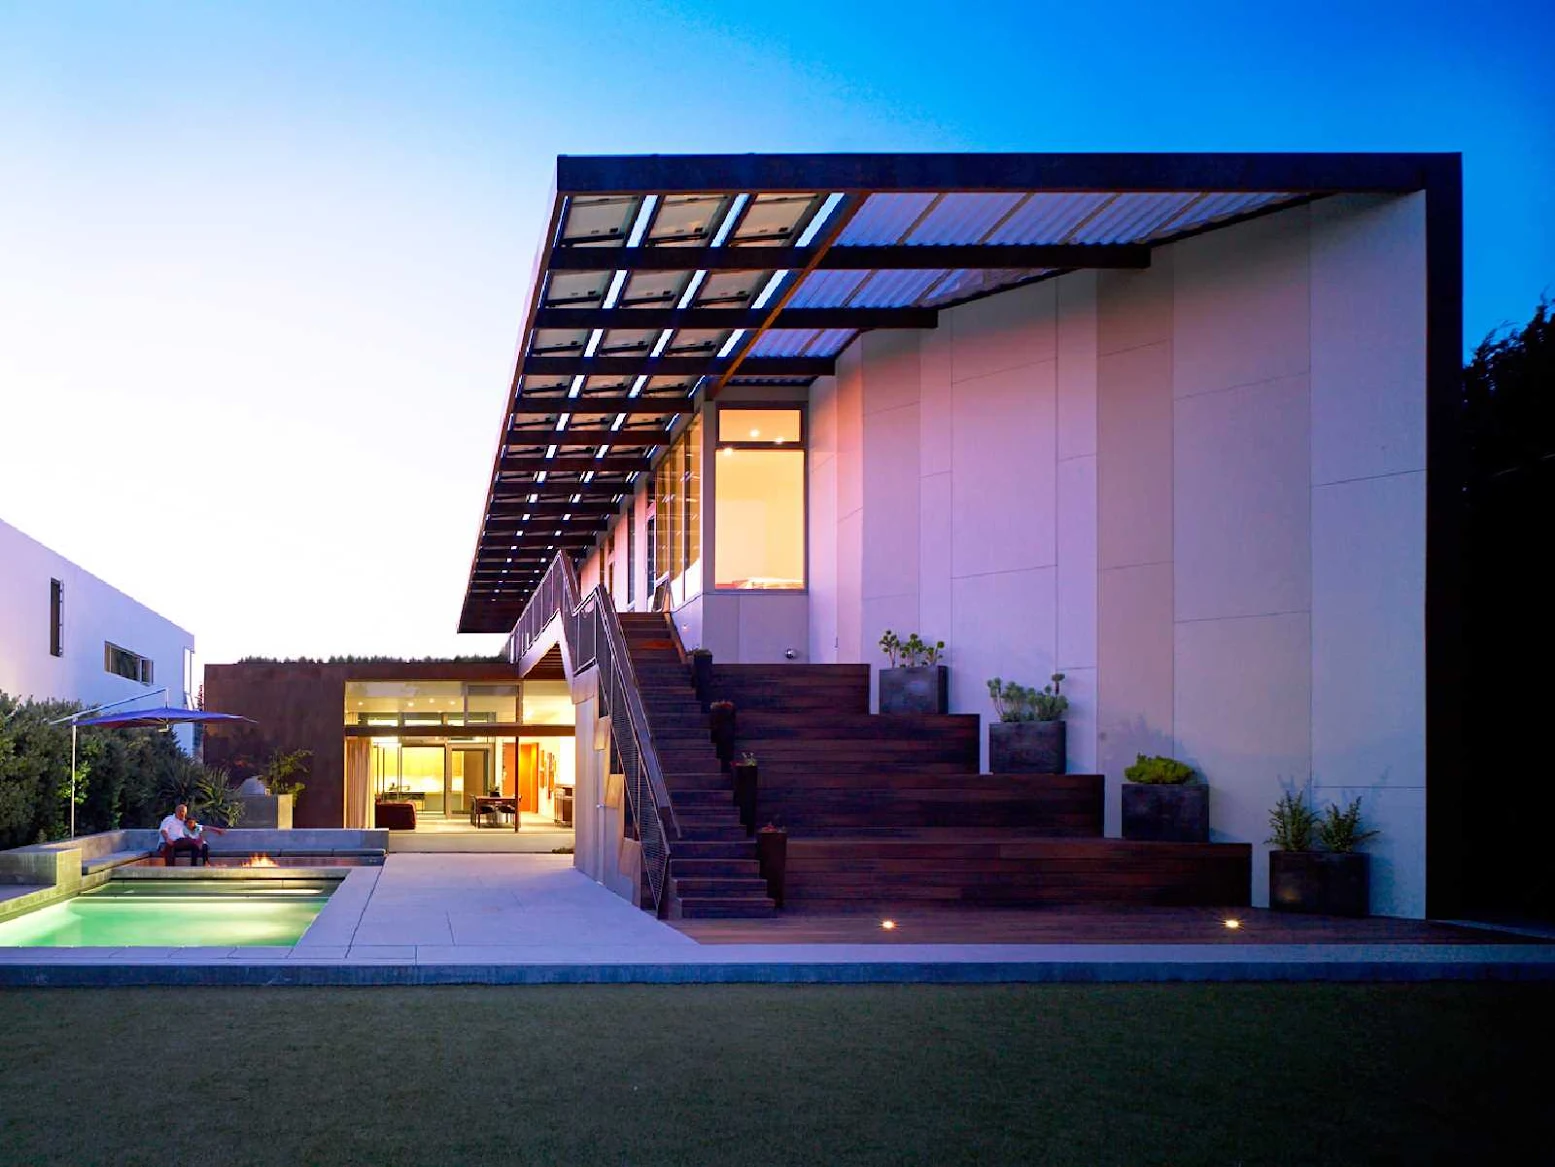 01 Yin-Yang House by Brooks + Scarpa Architects